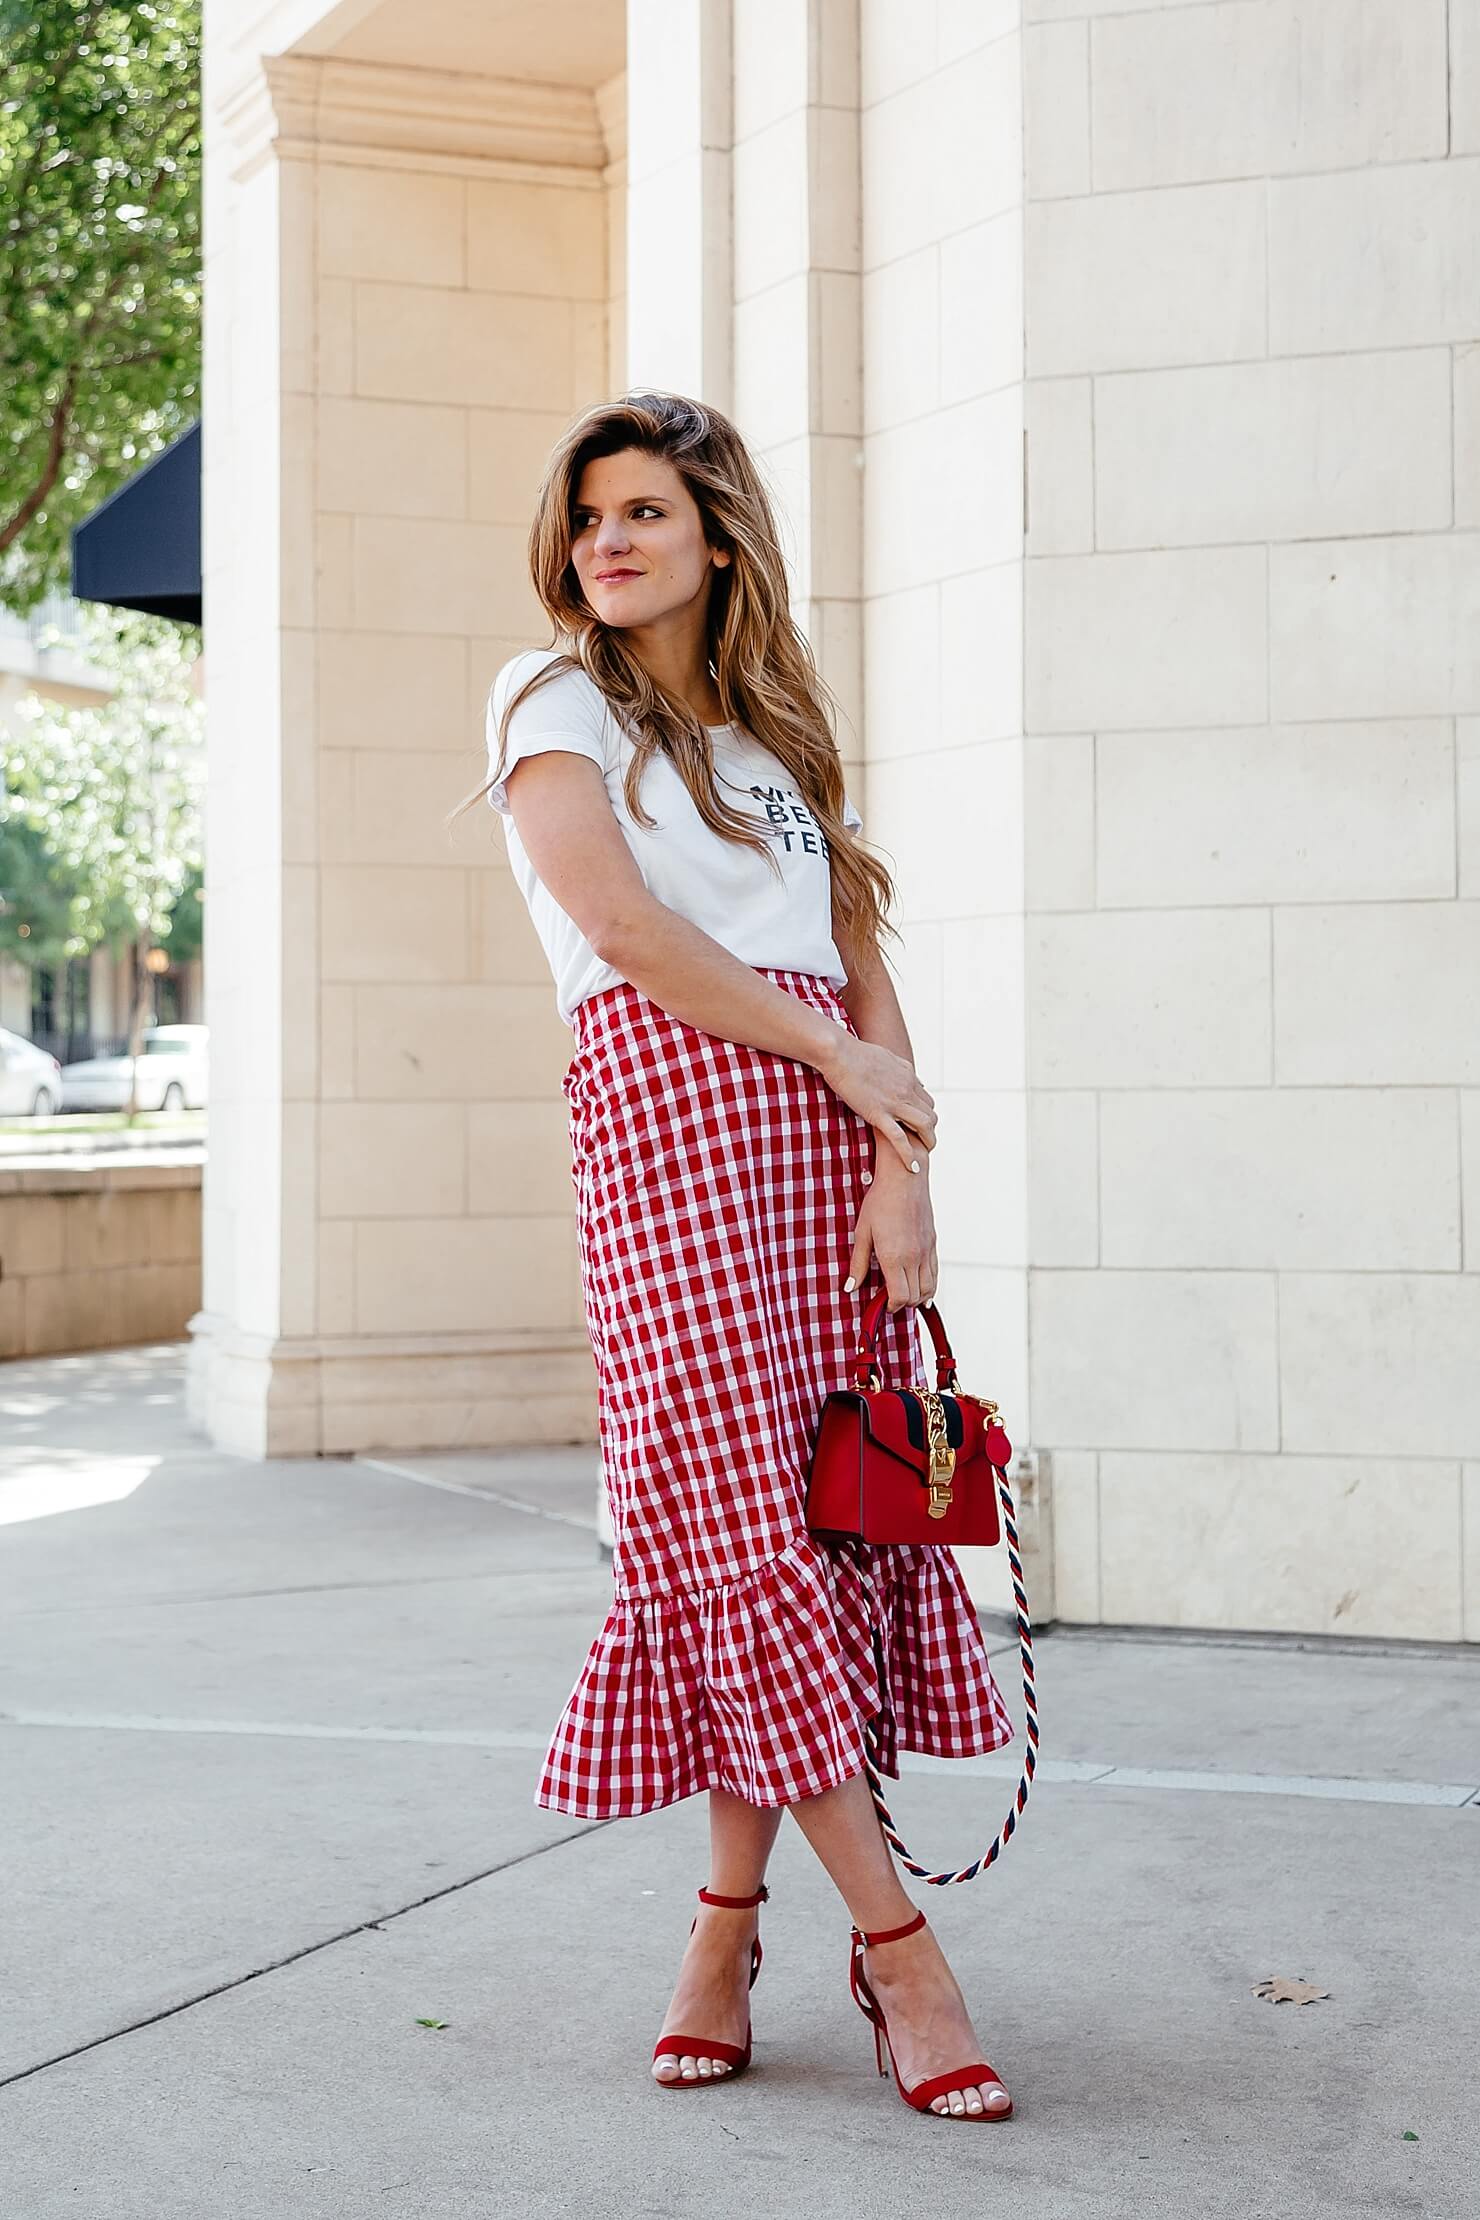 Peplum midi skirt with graphic tee and red gucci bag